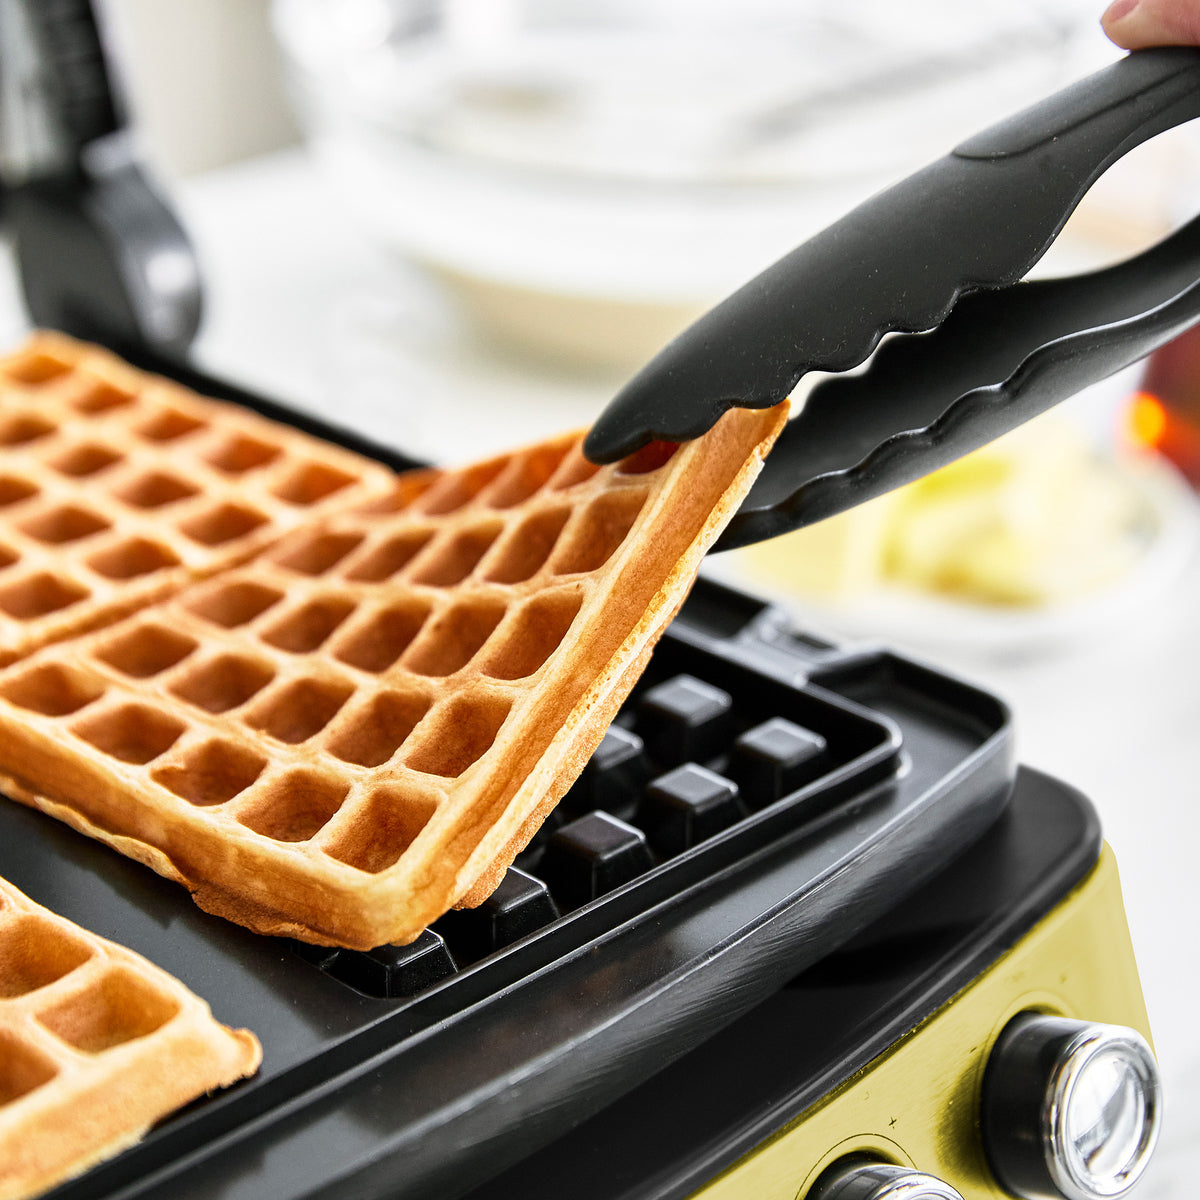 GreenPan Elite Multi Grill – Griddle & Waffle Maker